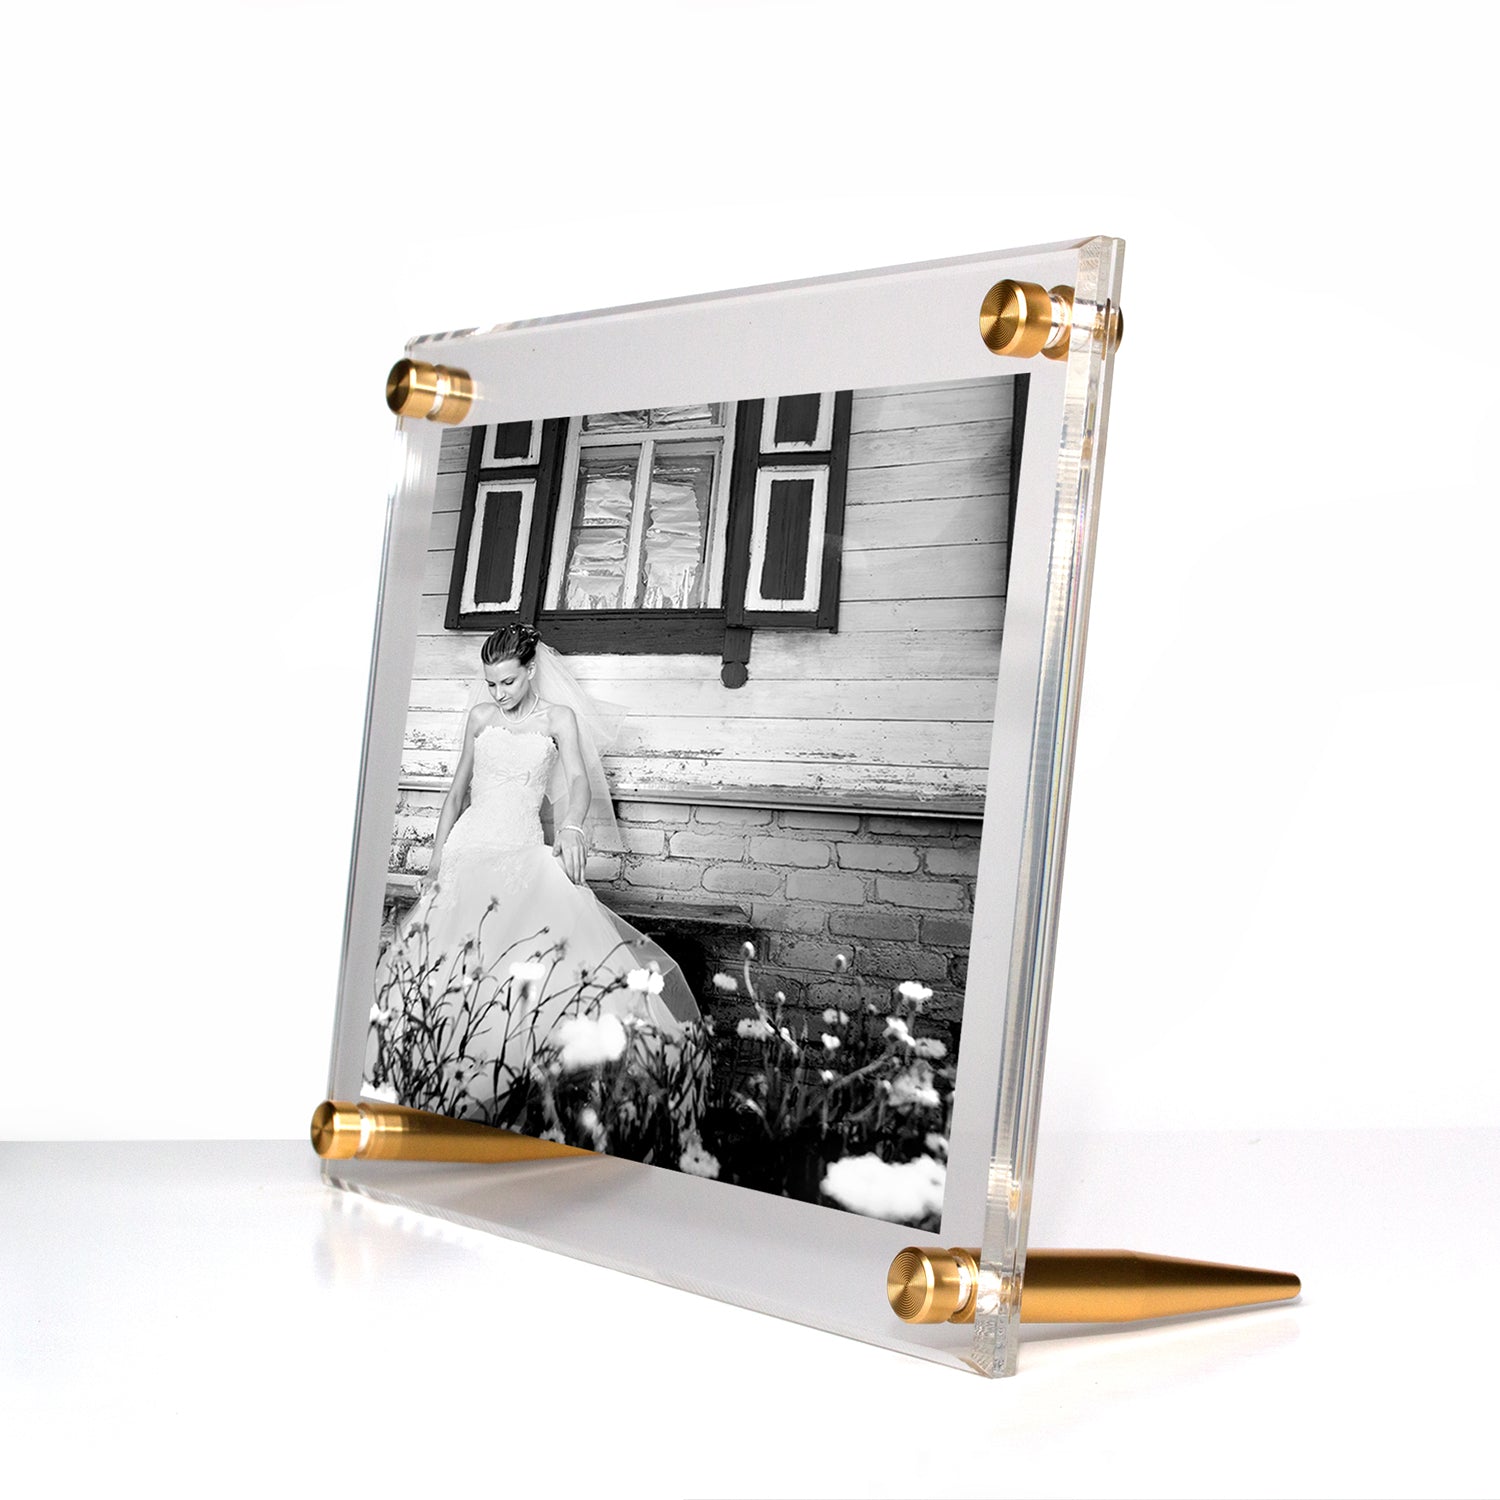 Wexel Art Acrylic Panel Frame - Single Panel Frame, 12 inch x 14 inch, Gold Hardware